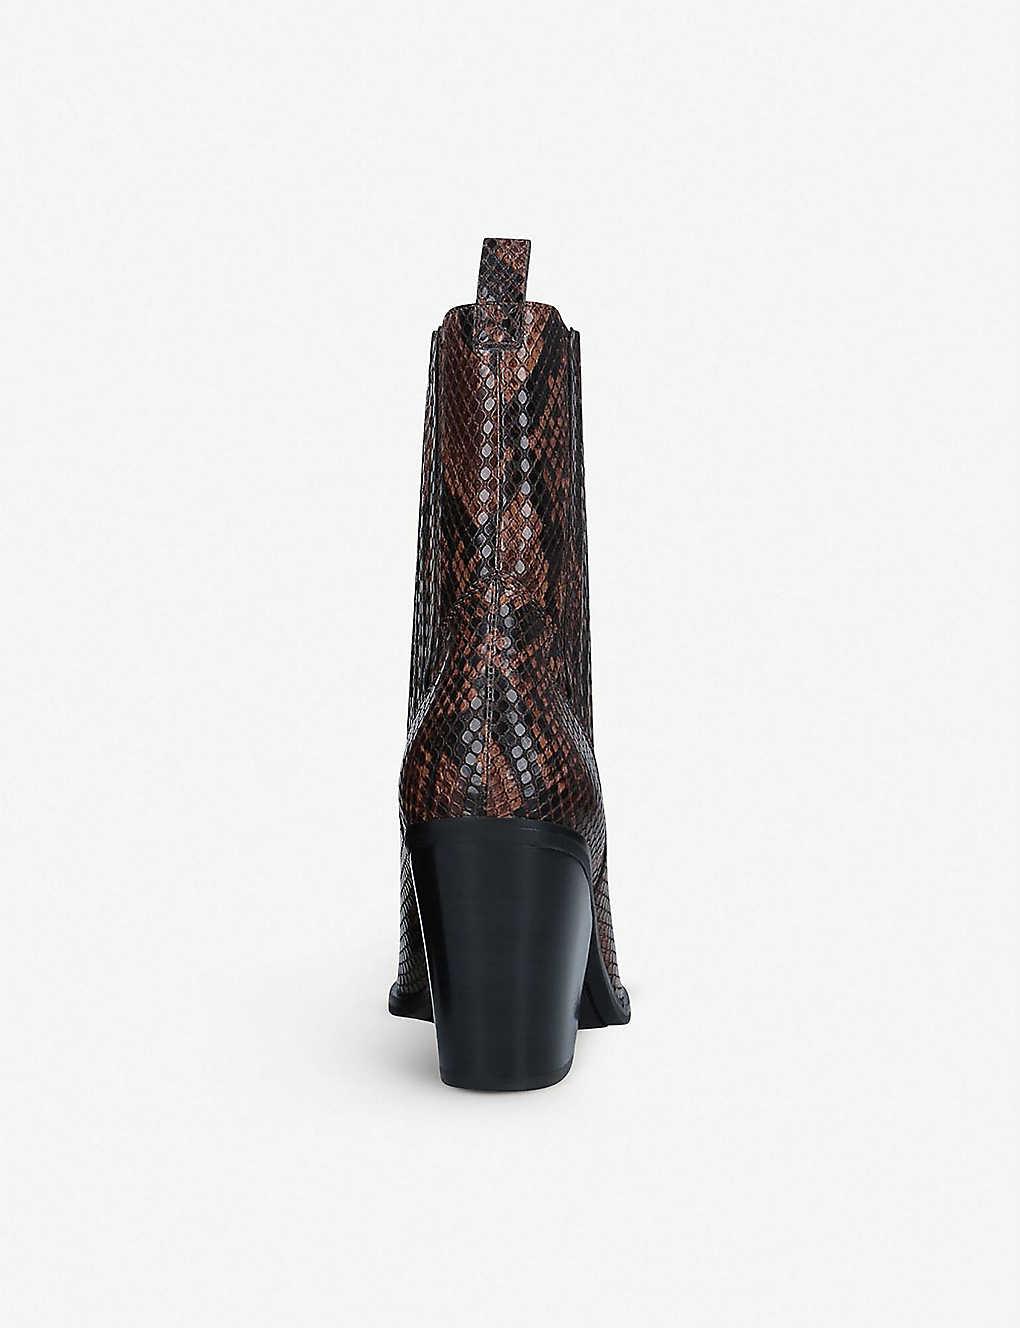 ALDO Drerissa Snakeskin-print Ankle Boots in Brown | Lyst